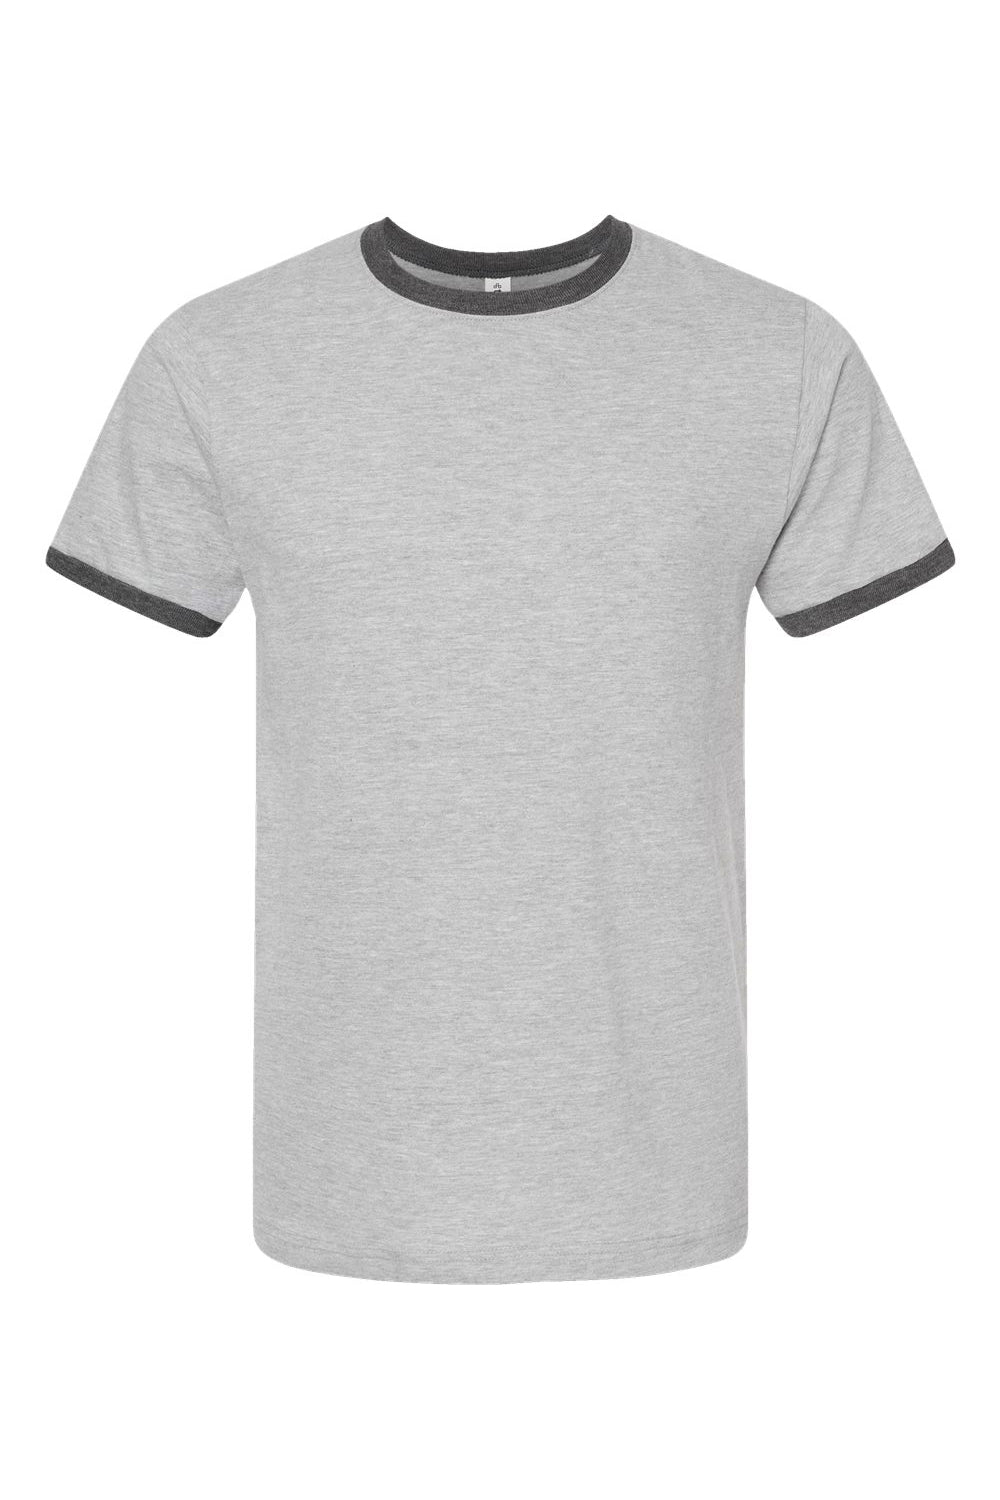 Tultex 246 Mens Fine Jersey Ringer Short Sleeve Crewneck T-Shirt Heather Grey/Heather Charcoal Grey Flat Front